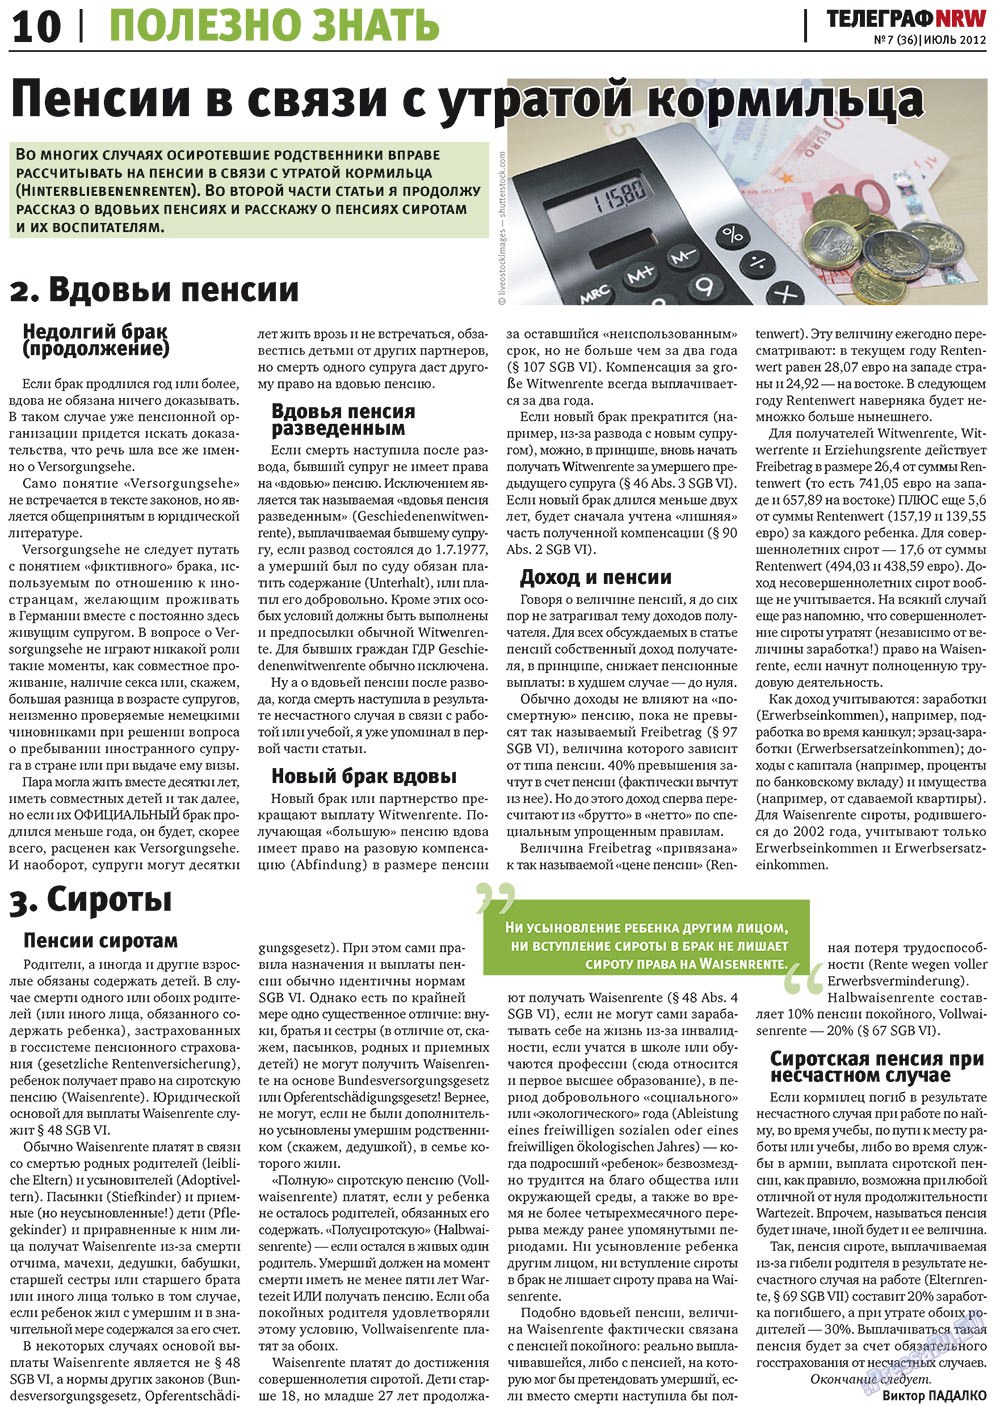 Телеграф NRW, газета. 2012 №7 стр.10